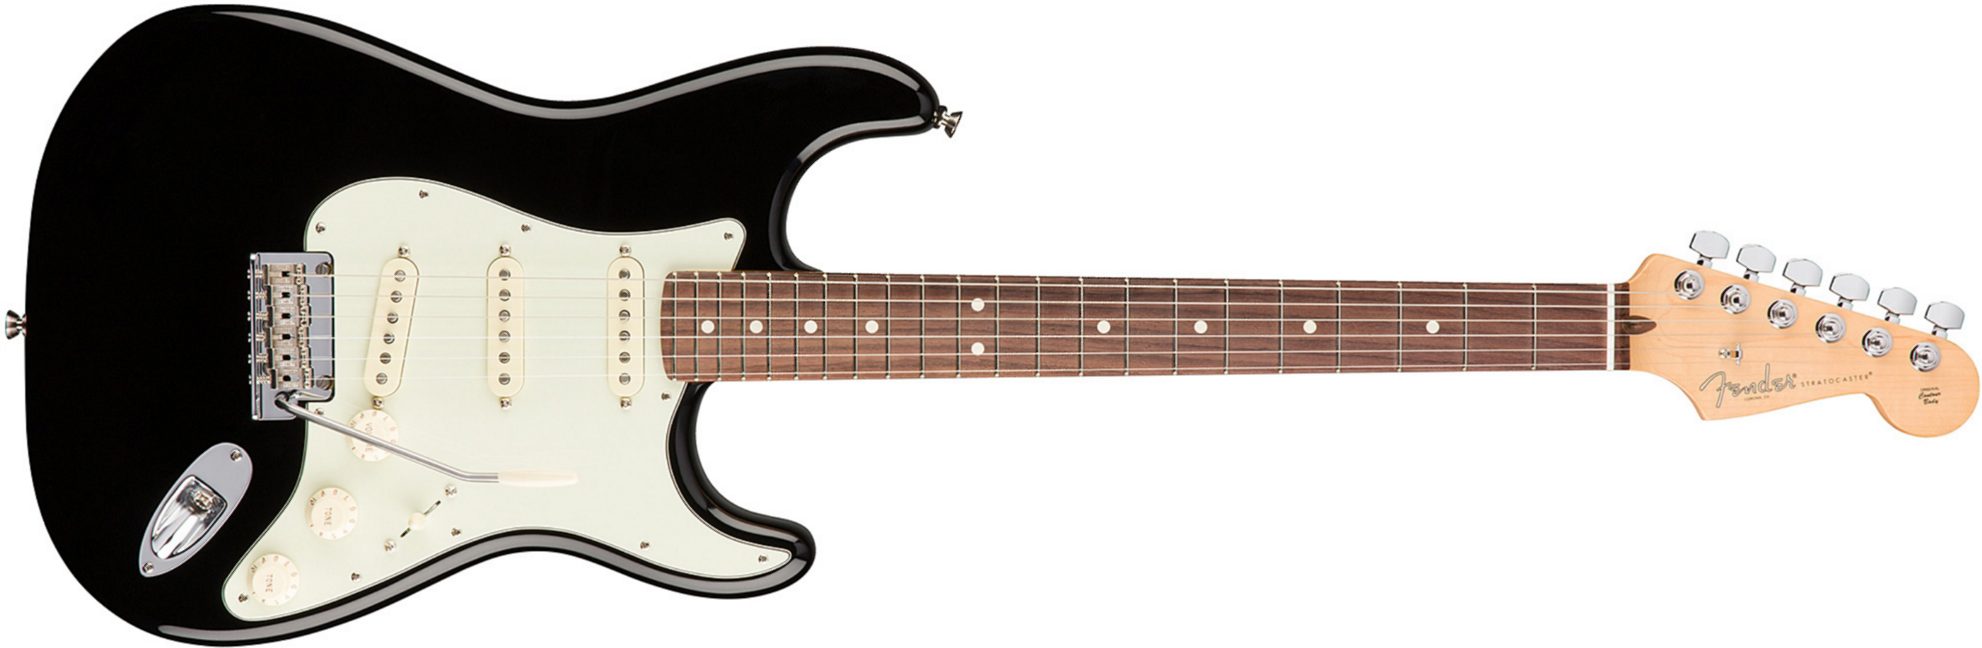 Fender Strat American Professional 2017 3s Usa Rw - Black - Str shape electric guitar - Main picture